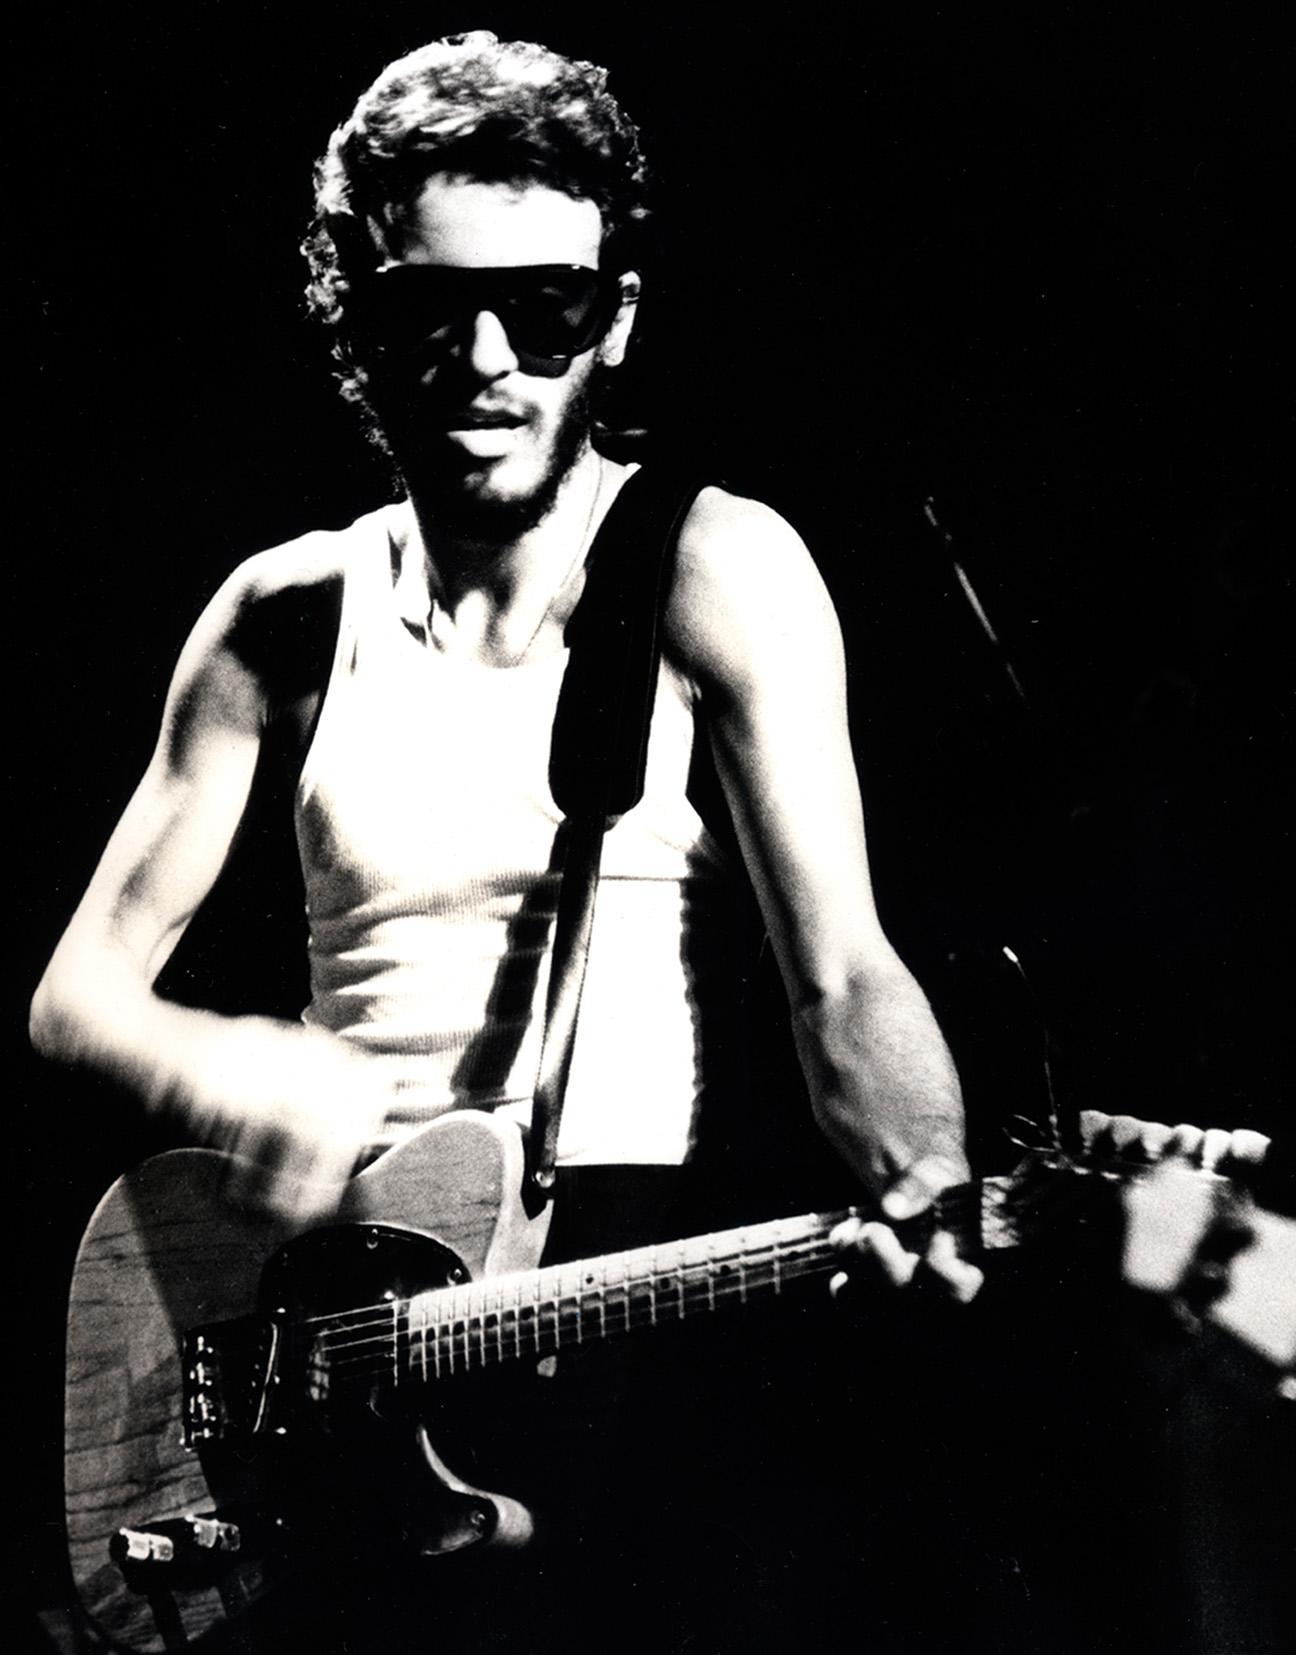 Fernando Natalici Black and White Photograph - Bruce Springsteen photograph (Bruce Springsteen the Bottom Line, NYC 1975)